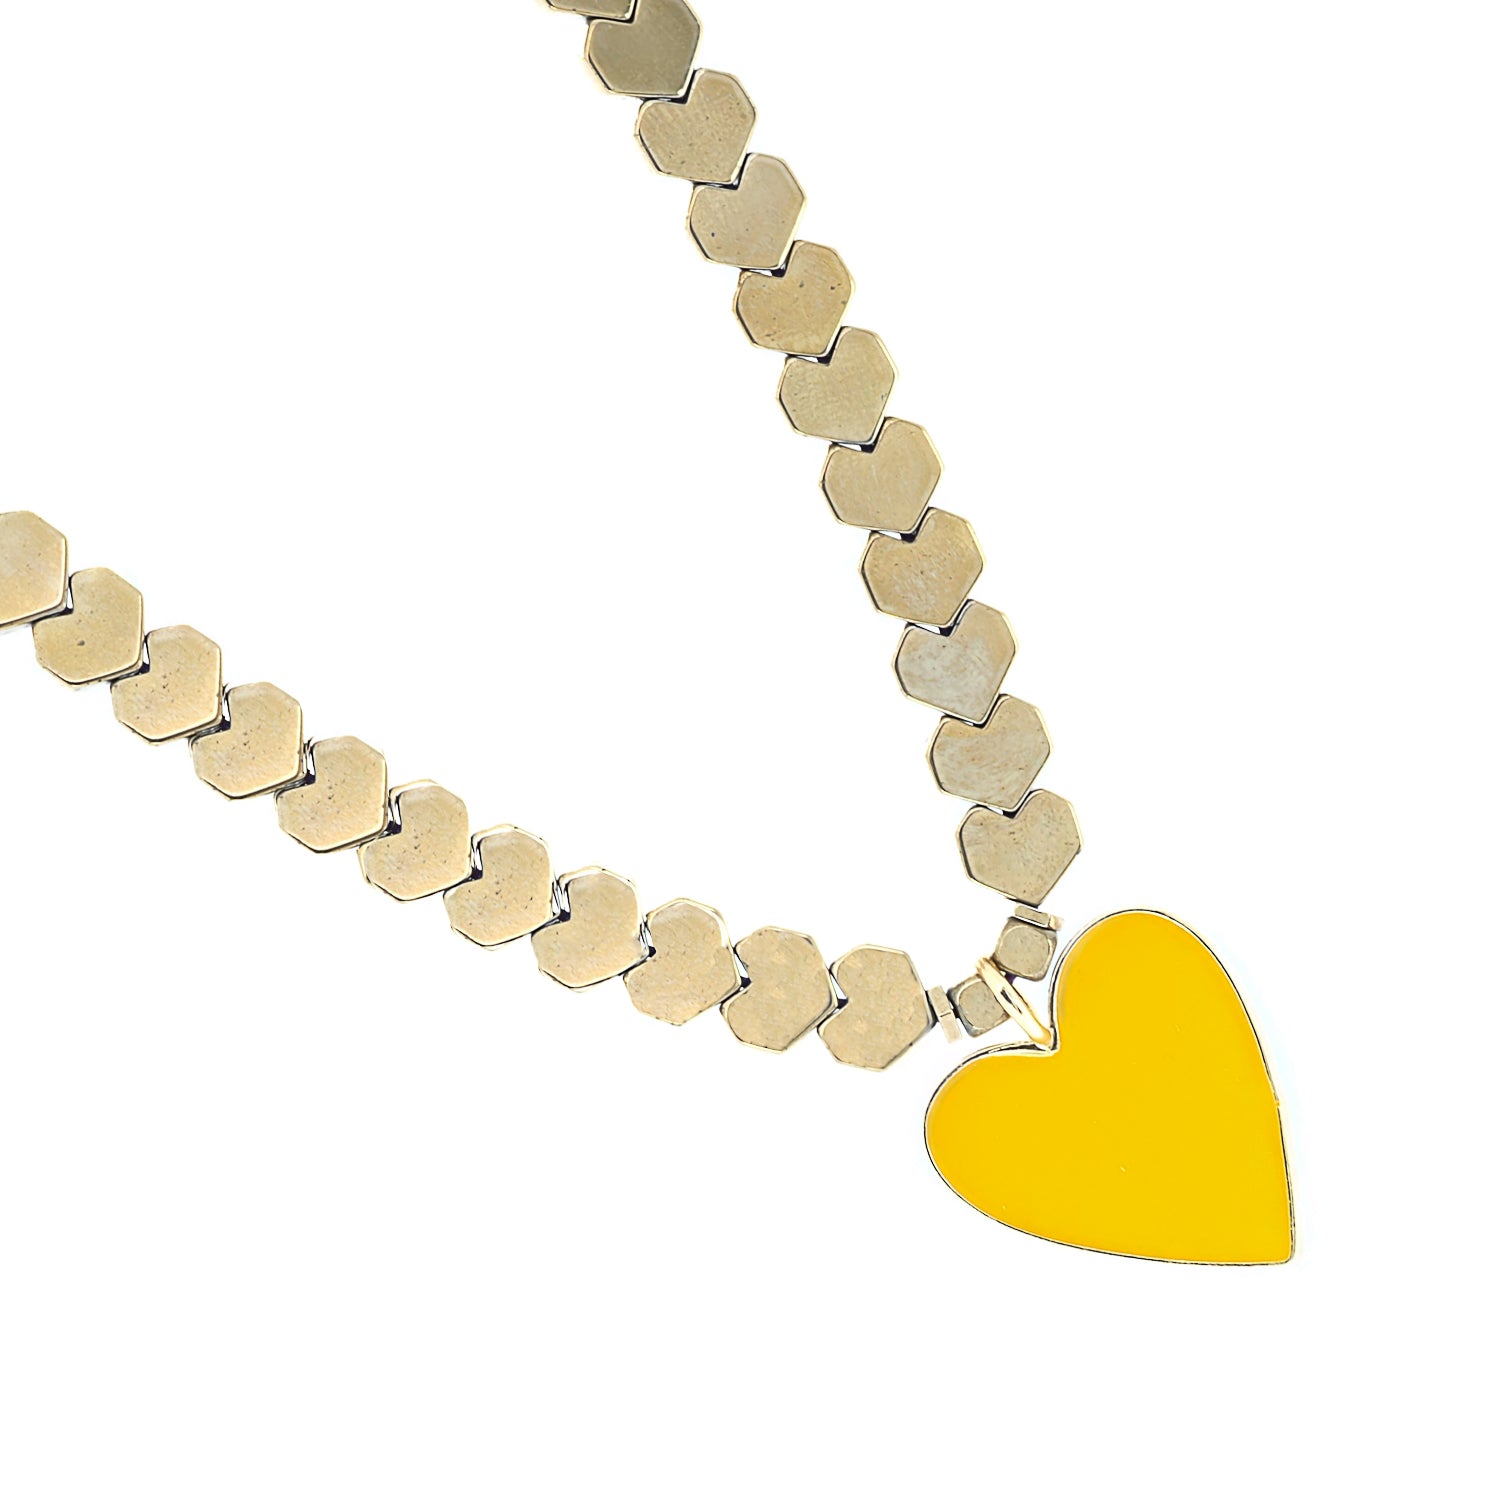 Unbreakable Bond - Heart-shaped hematite beads symbolize an unbreakable bond.